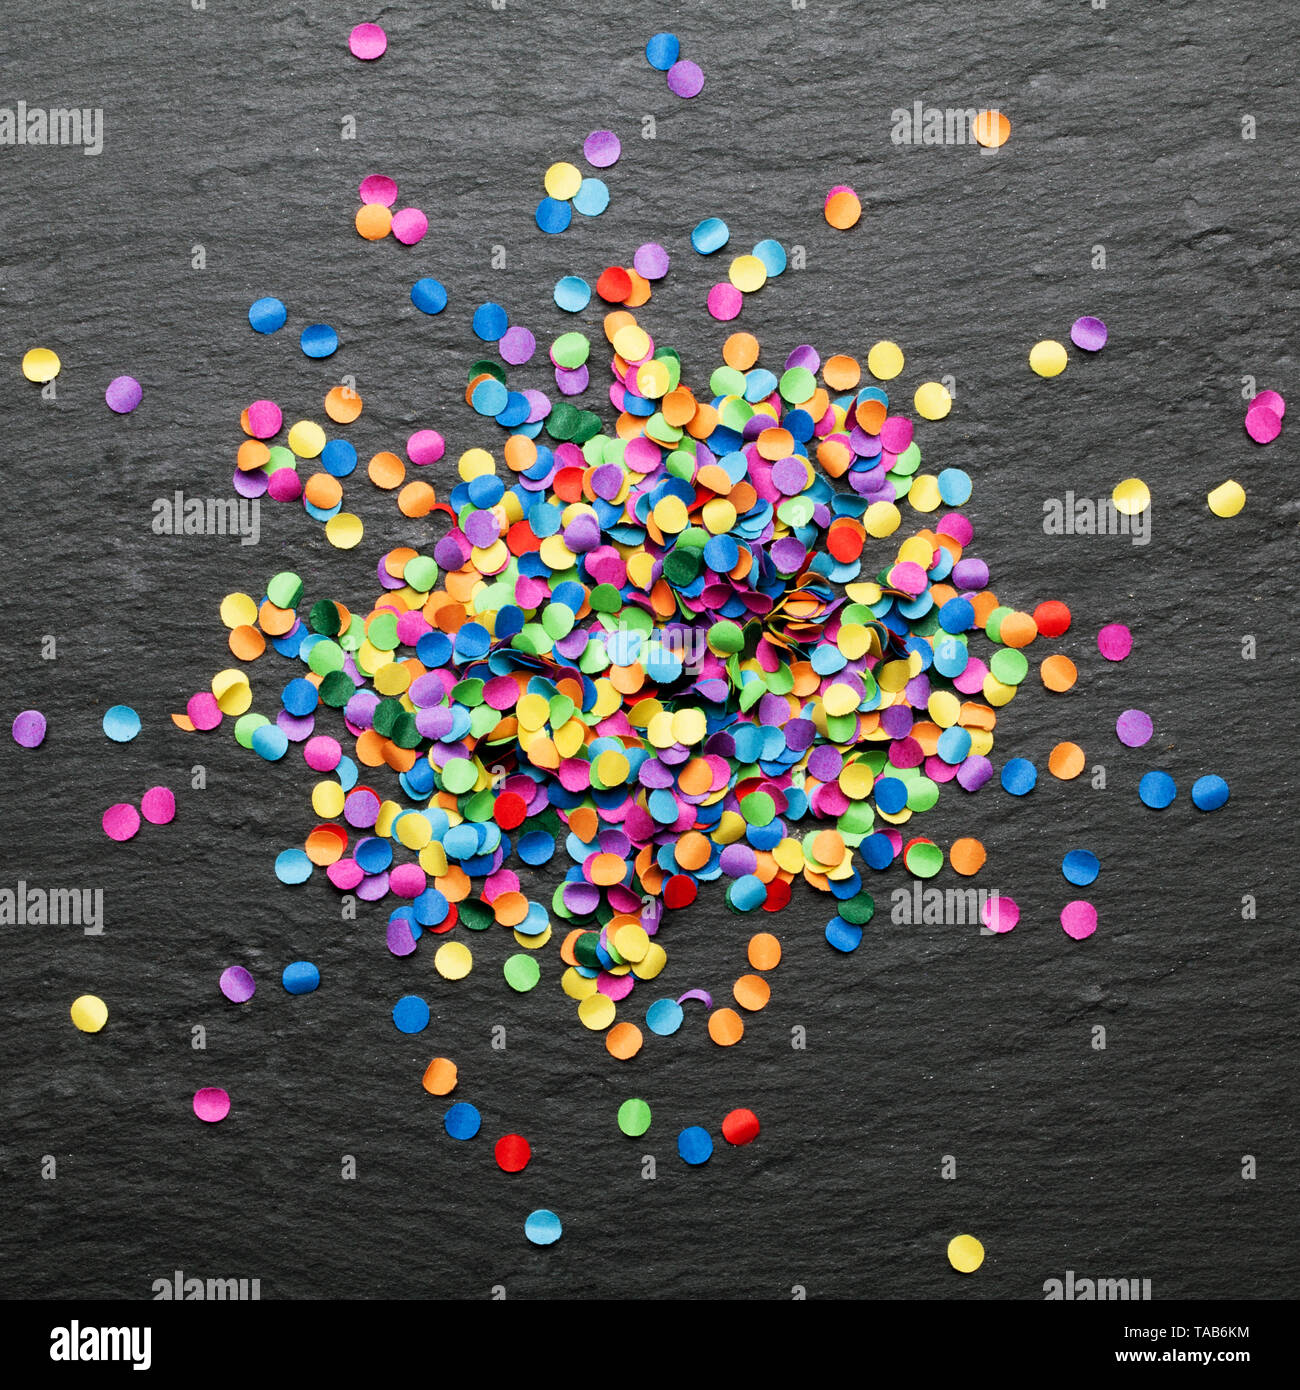 confetti colorful background with blackboard Stock Photo